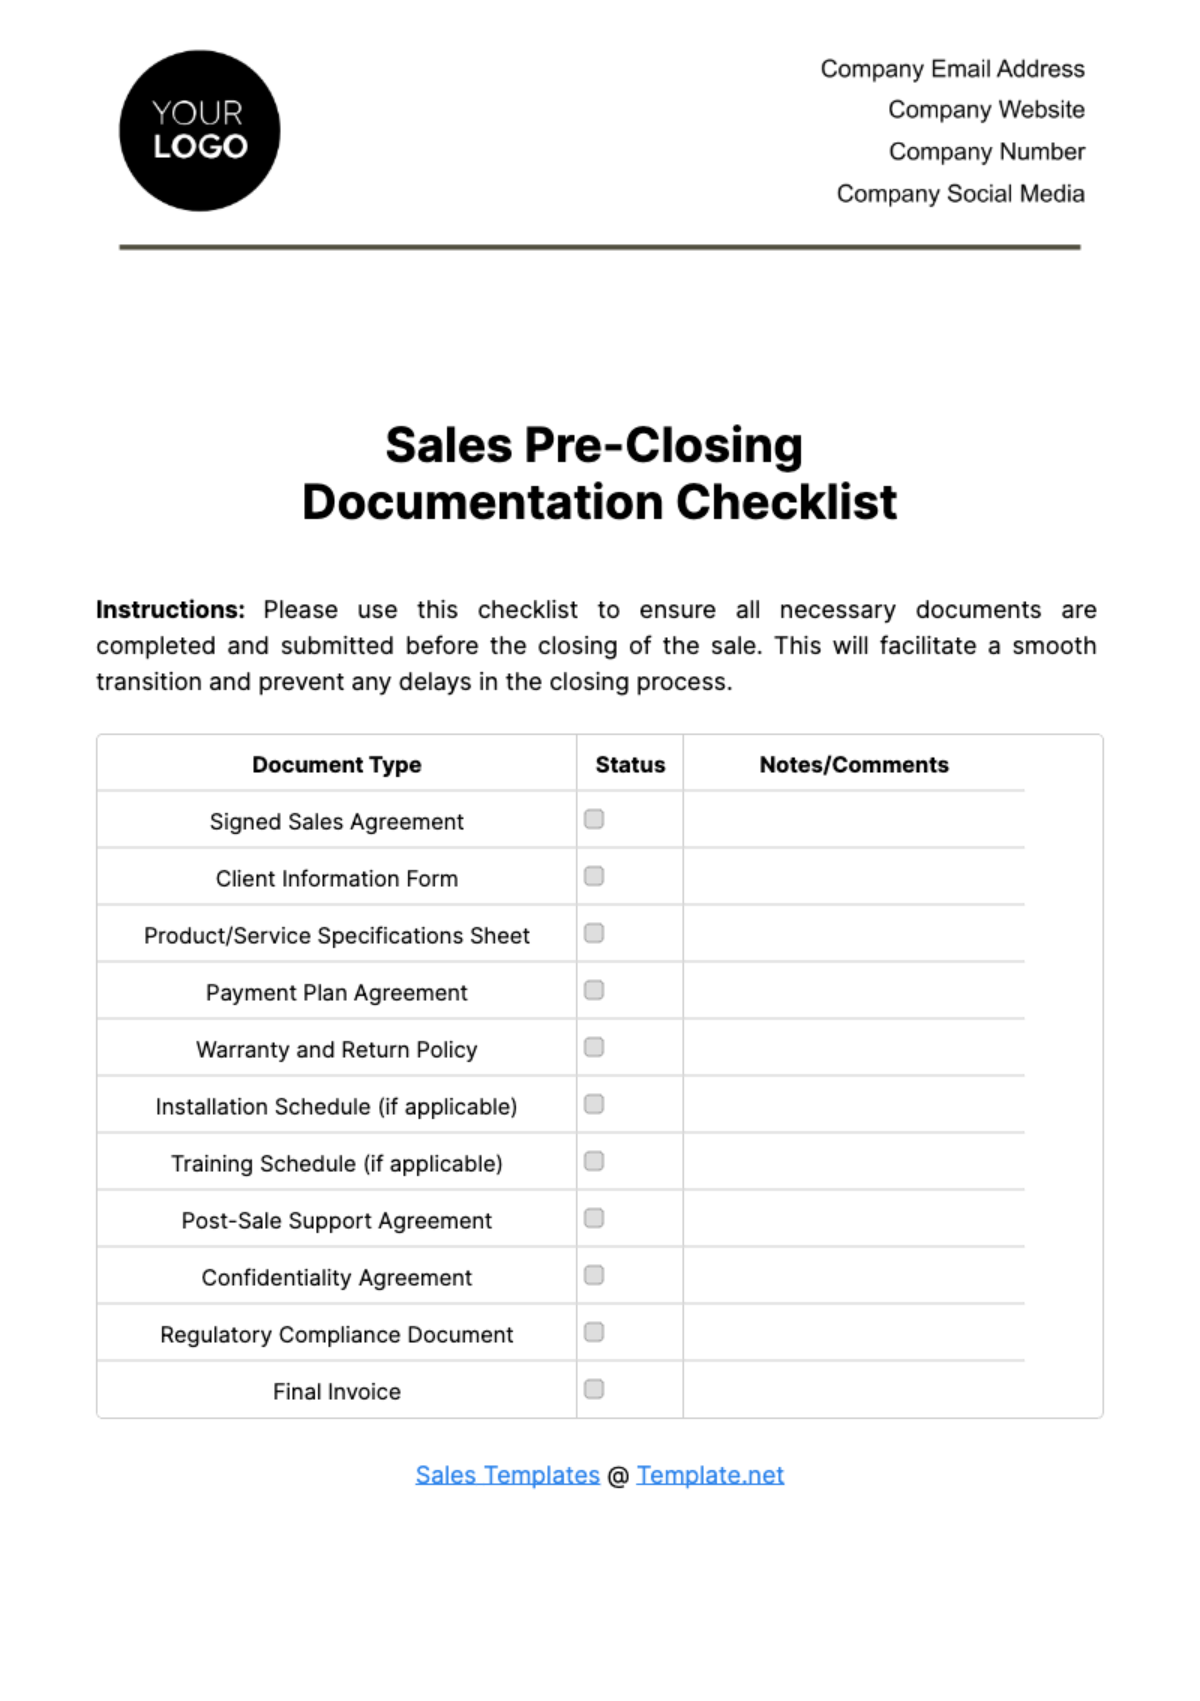 Free Sales Pre-Closing Documentation Checklist Template